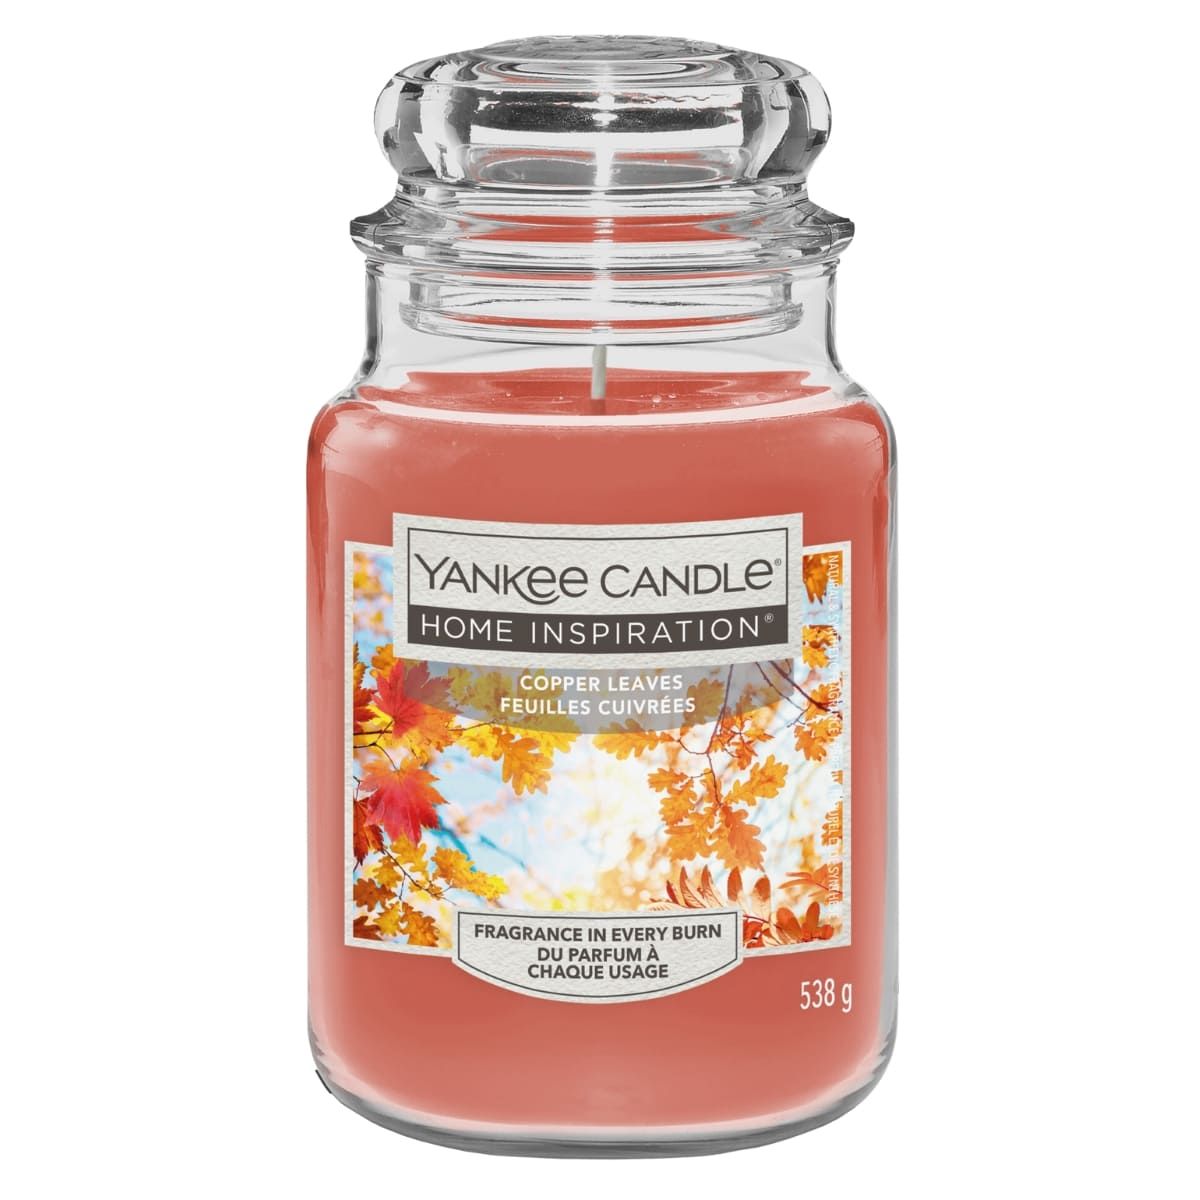 Ароматическая Свеча Yankee Candle Home Inspiration Copper Leaves, 538 гр yankee candle home inspiration ароматическая свеча утреннее блаженство 538 г